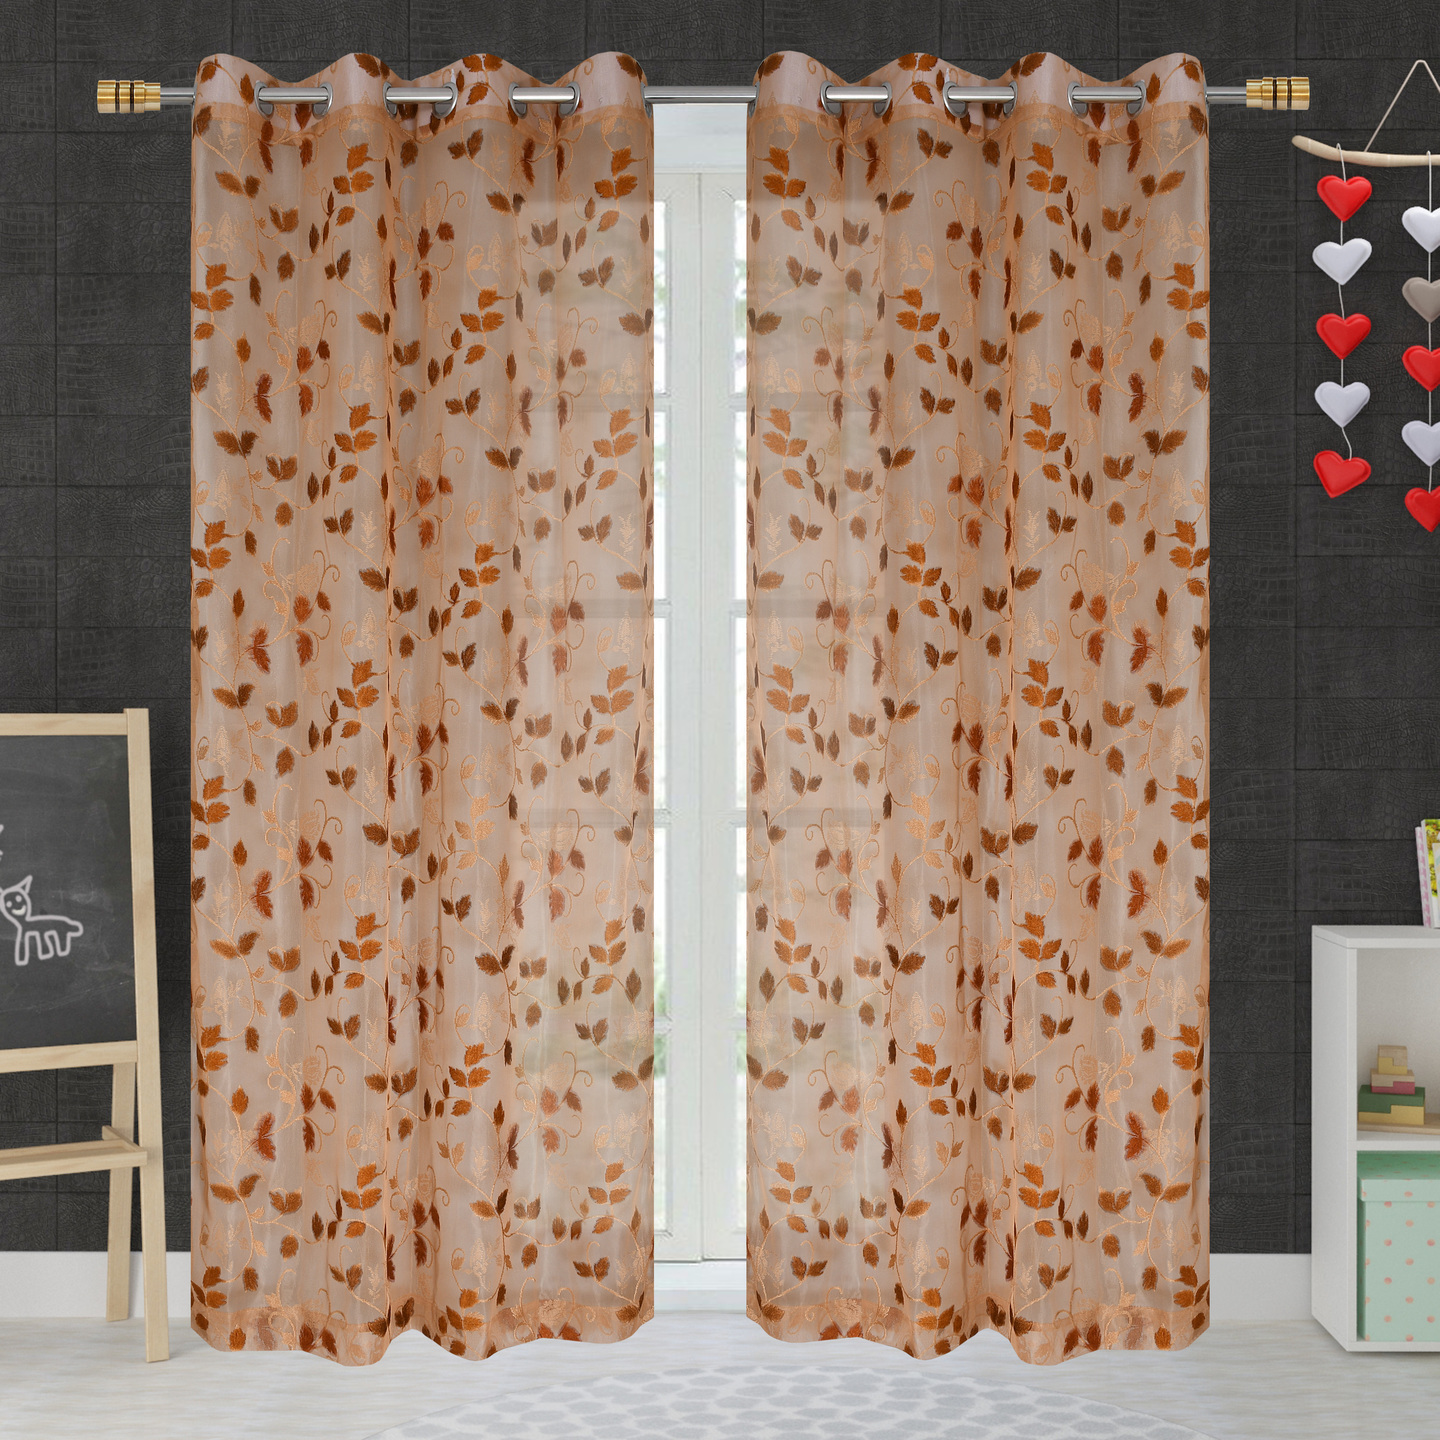 Handtex Home Net door curtain 4 feet x 9 feet Brown set of 2 pc